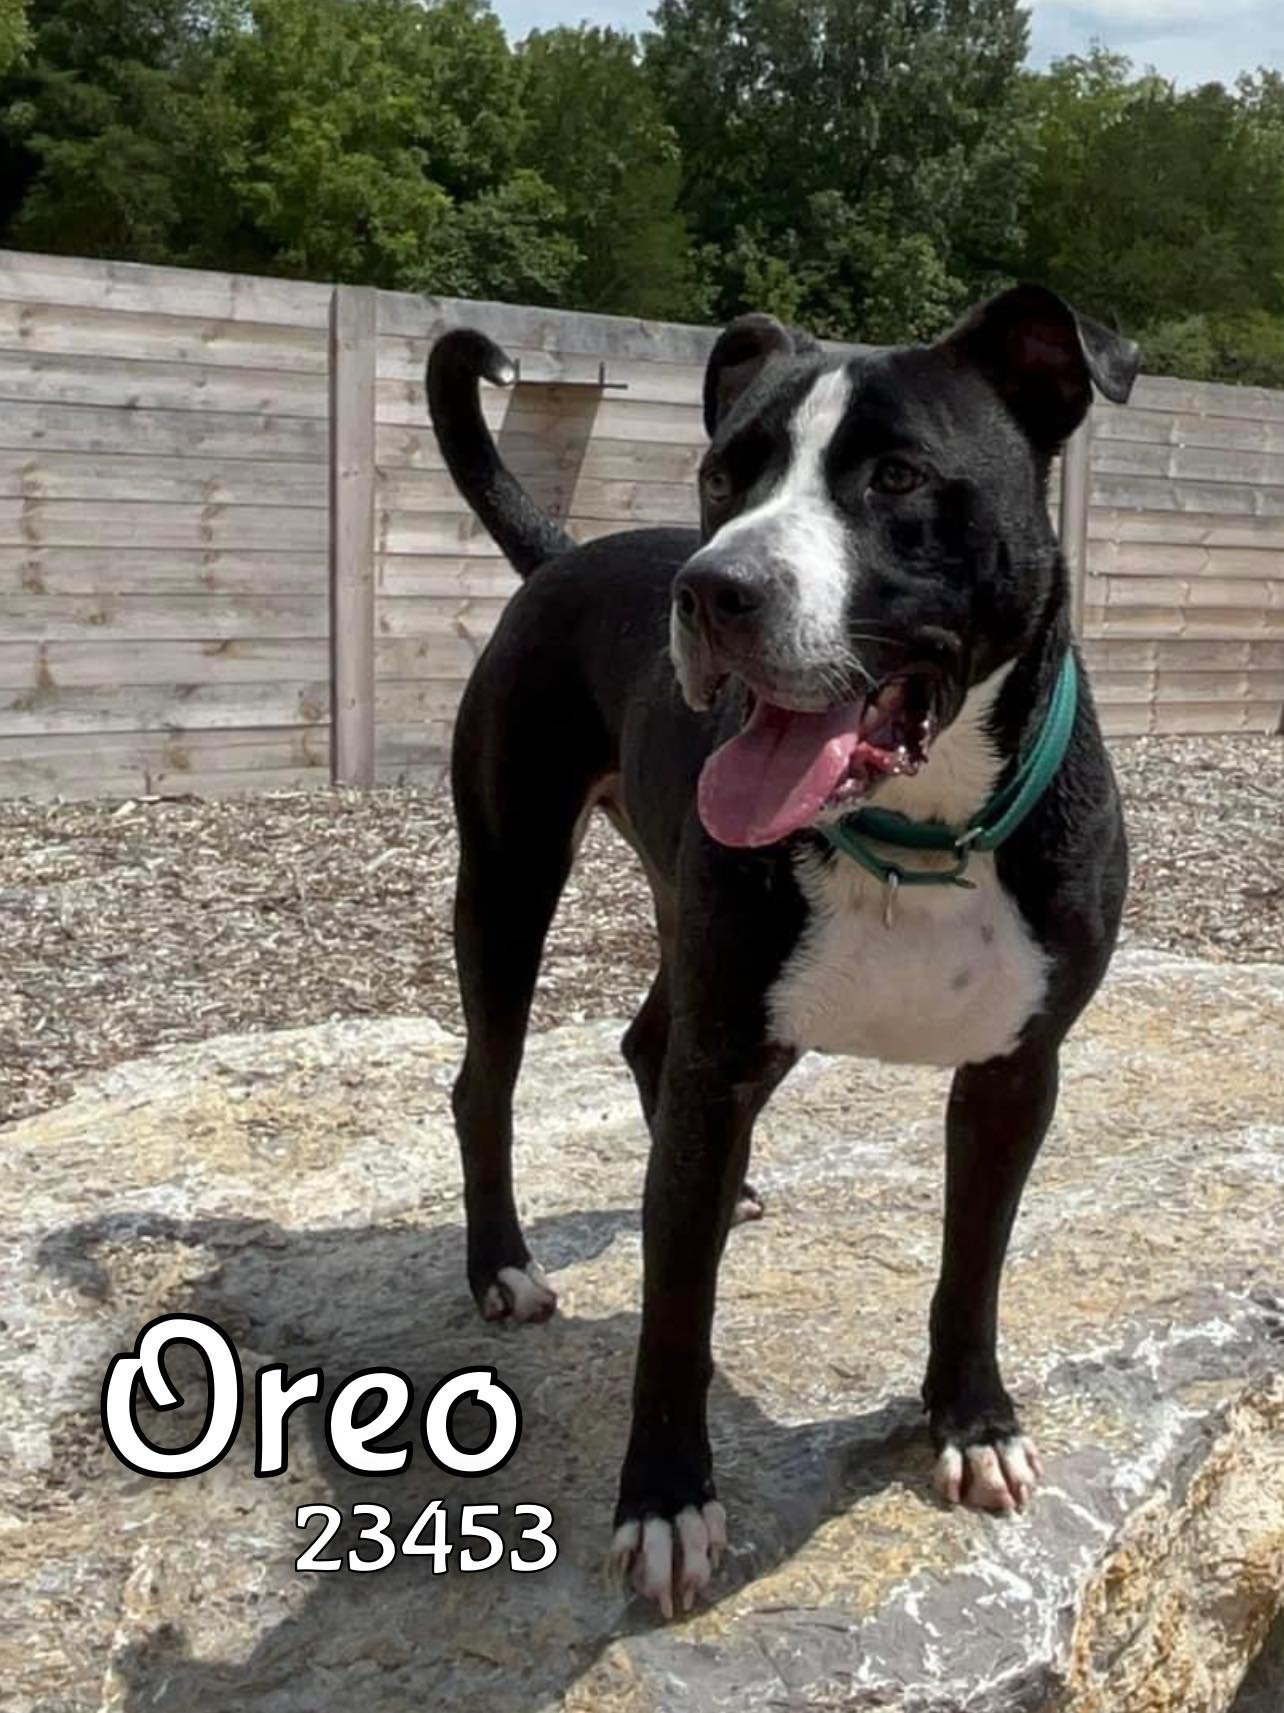 Oreo - $25 Adoption Fee Special, an adoptable Pit Bull Terrier, Boxer in Oak Ridge, TN, 37830 | Photo Image 1